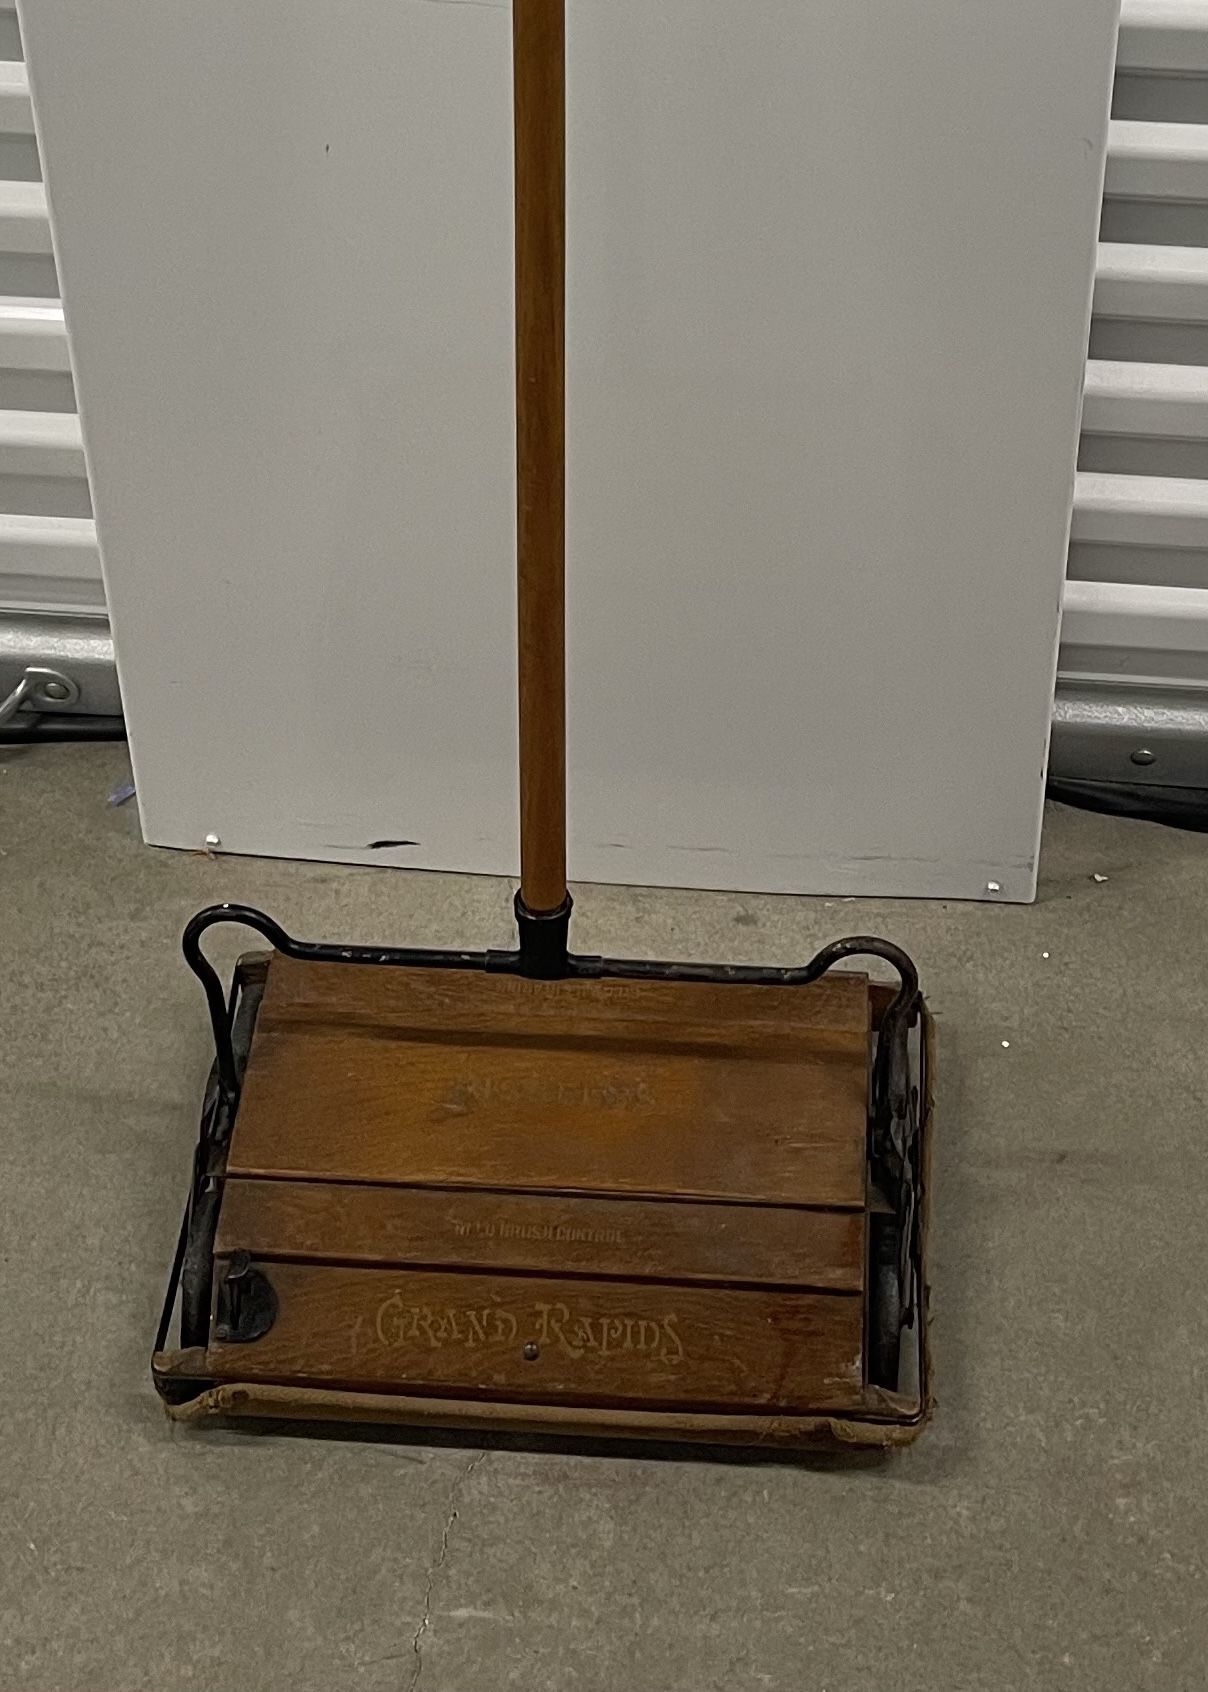 Vintage Bissell Grand Rapids Wooden Cyco Bearing Manual Sweeper Vacuum